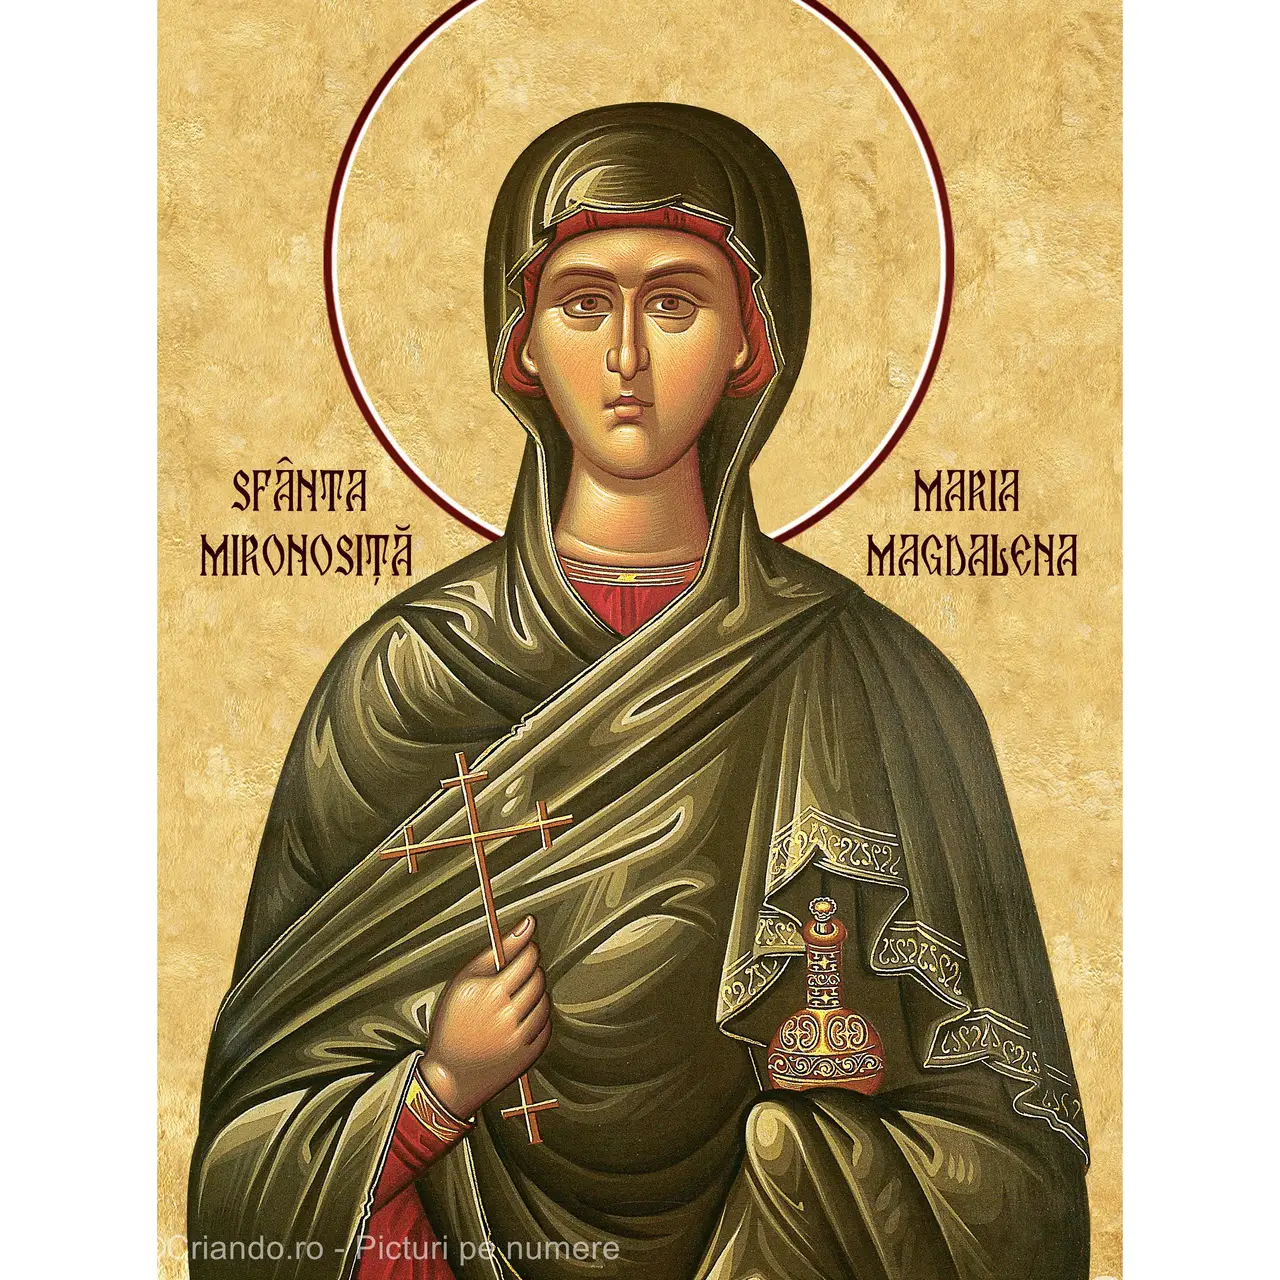 Picturi pe numere Religioase 40x50 cm Sfanta Mironosita Maria Magdalena 22 Iulie PDP1463